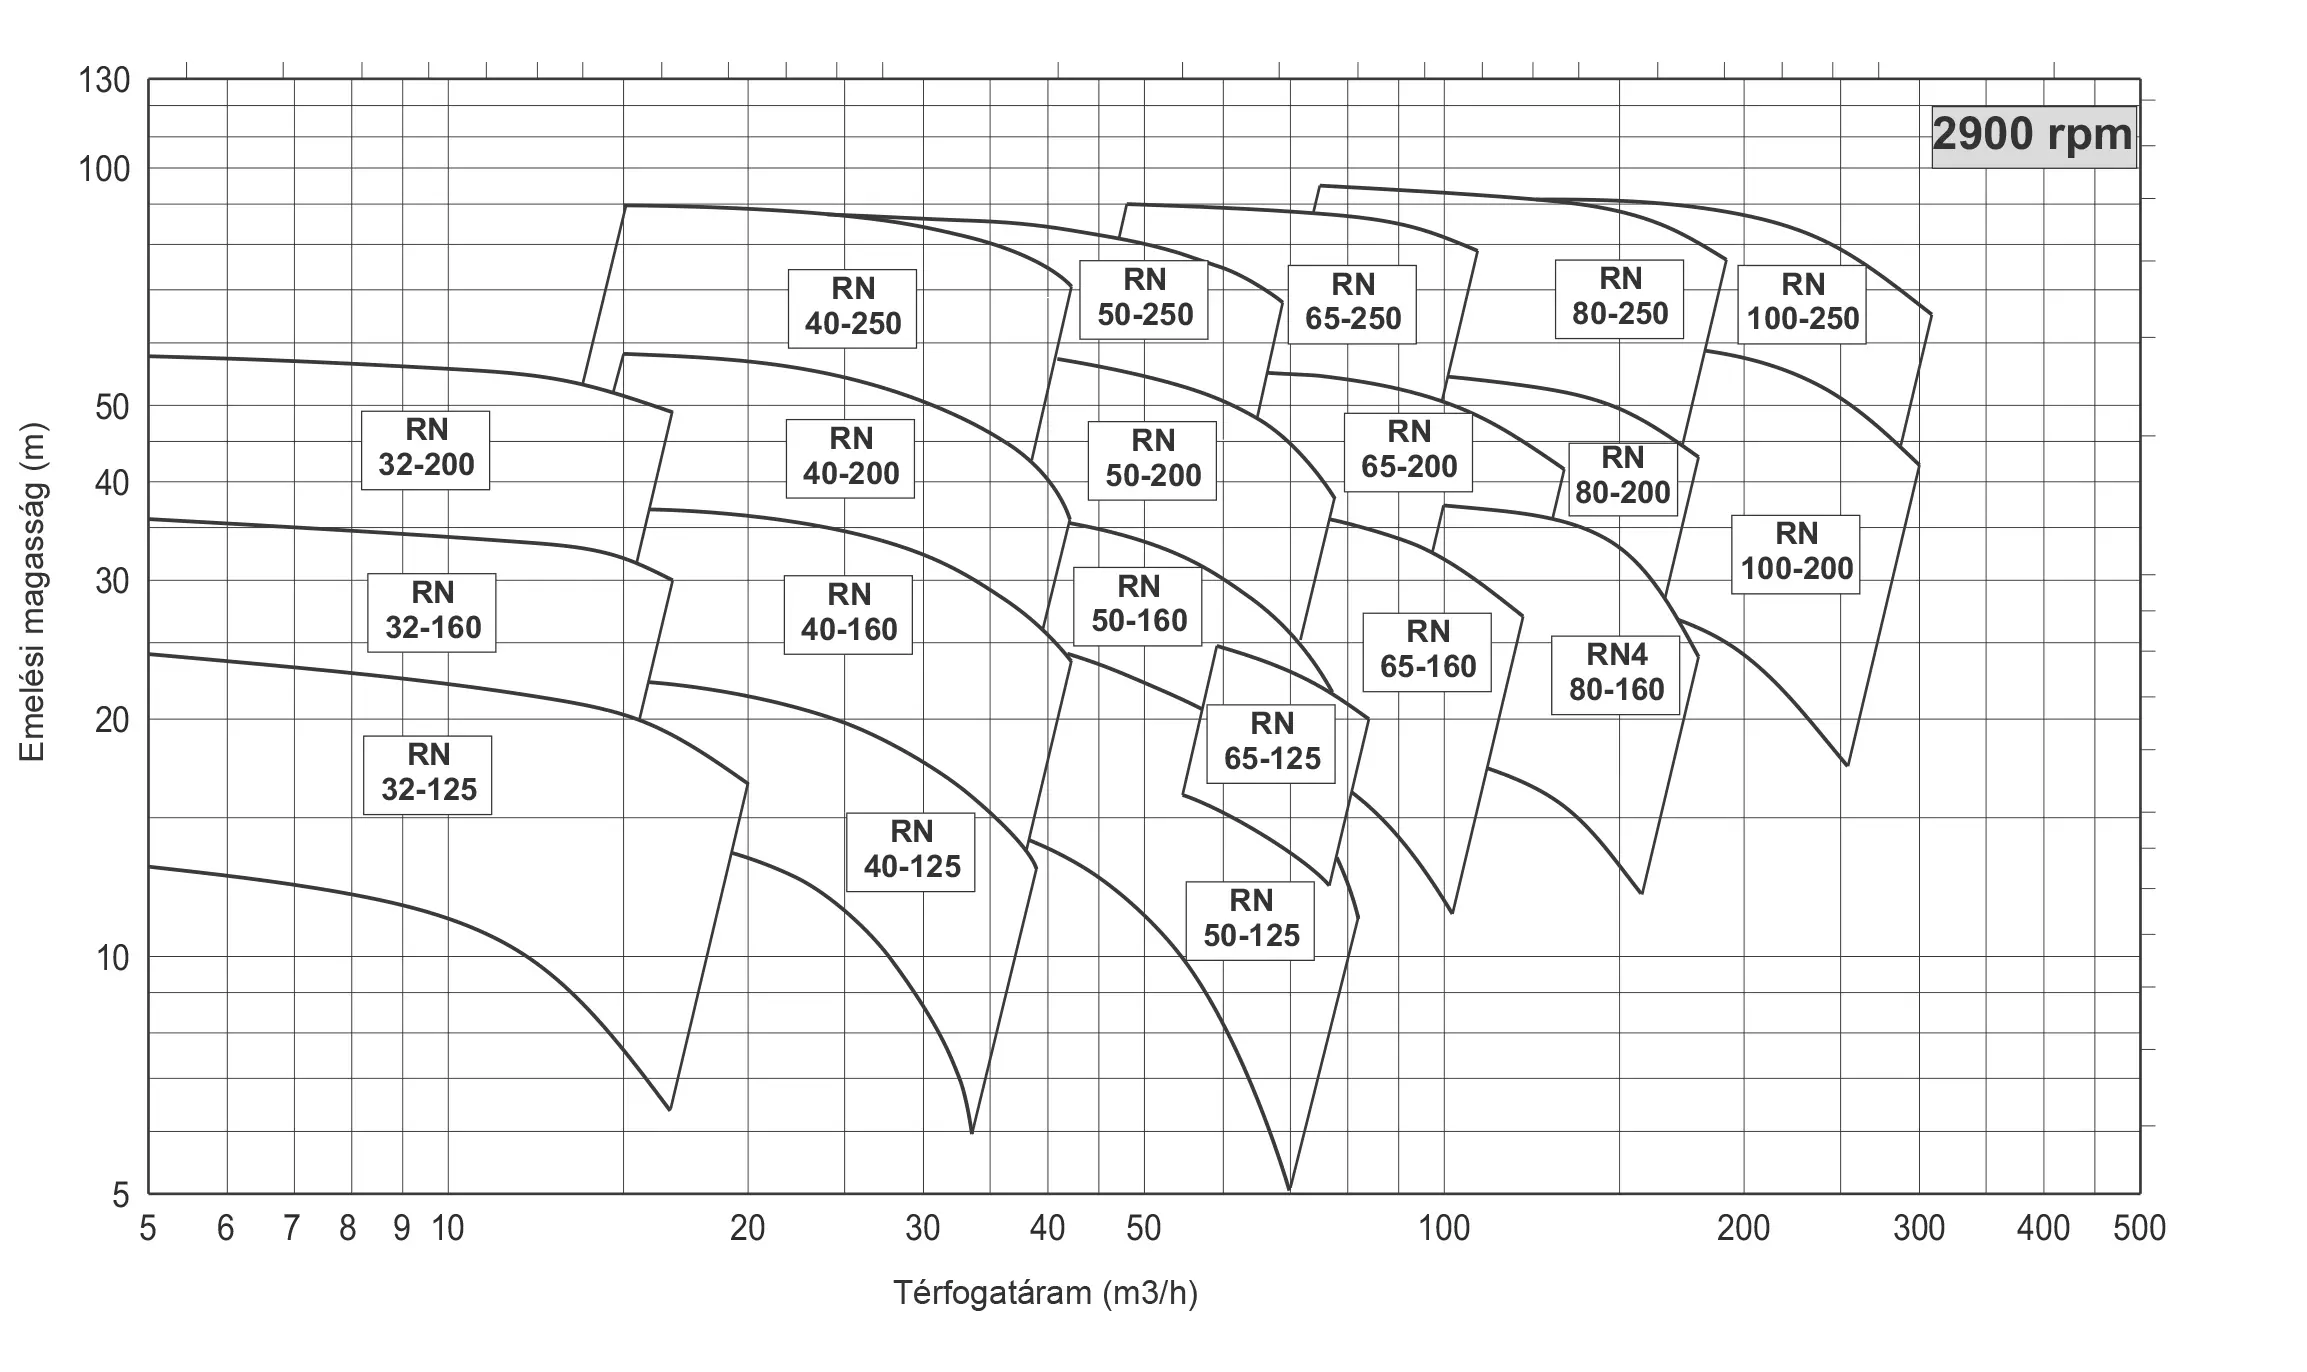 RN Performance curves